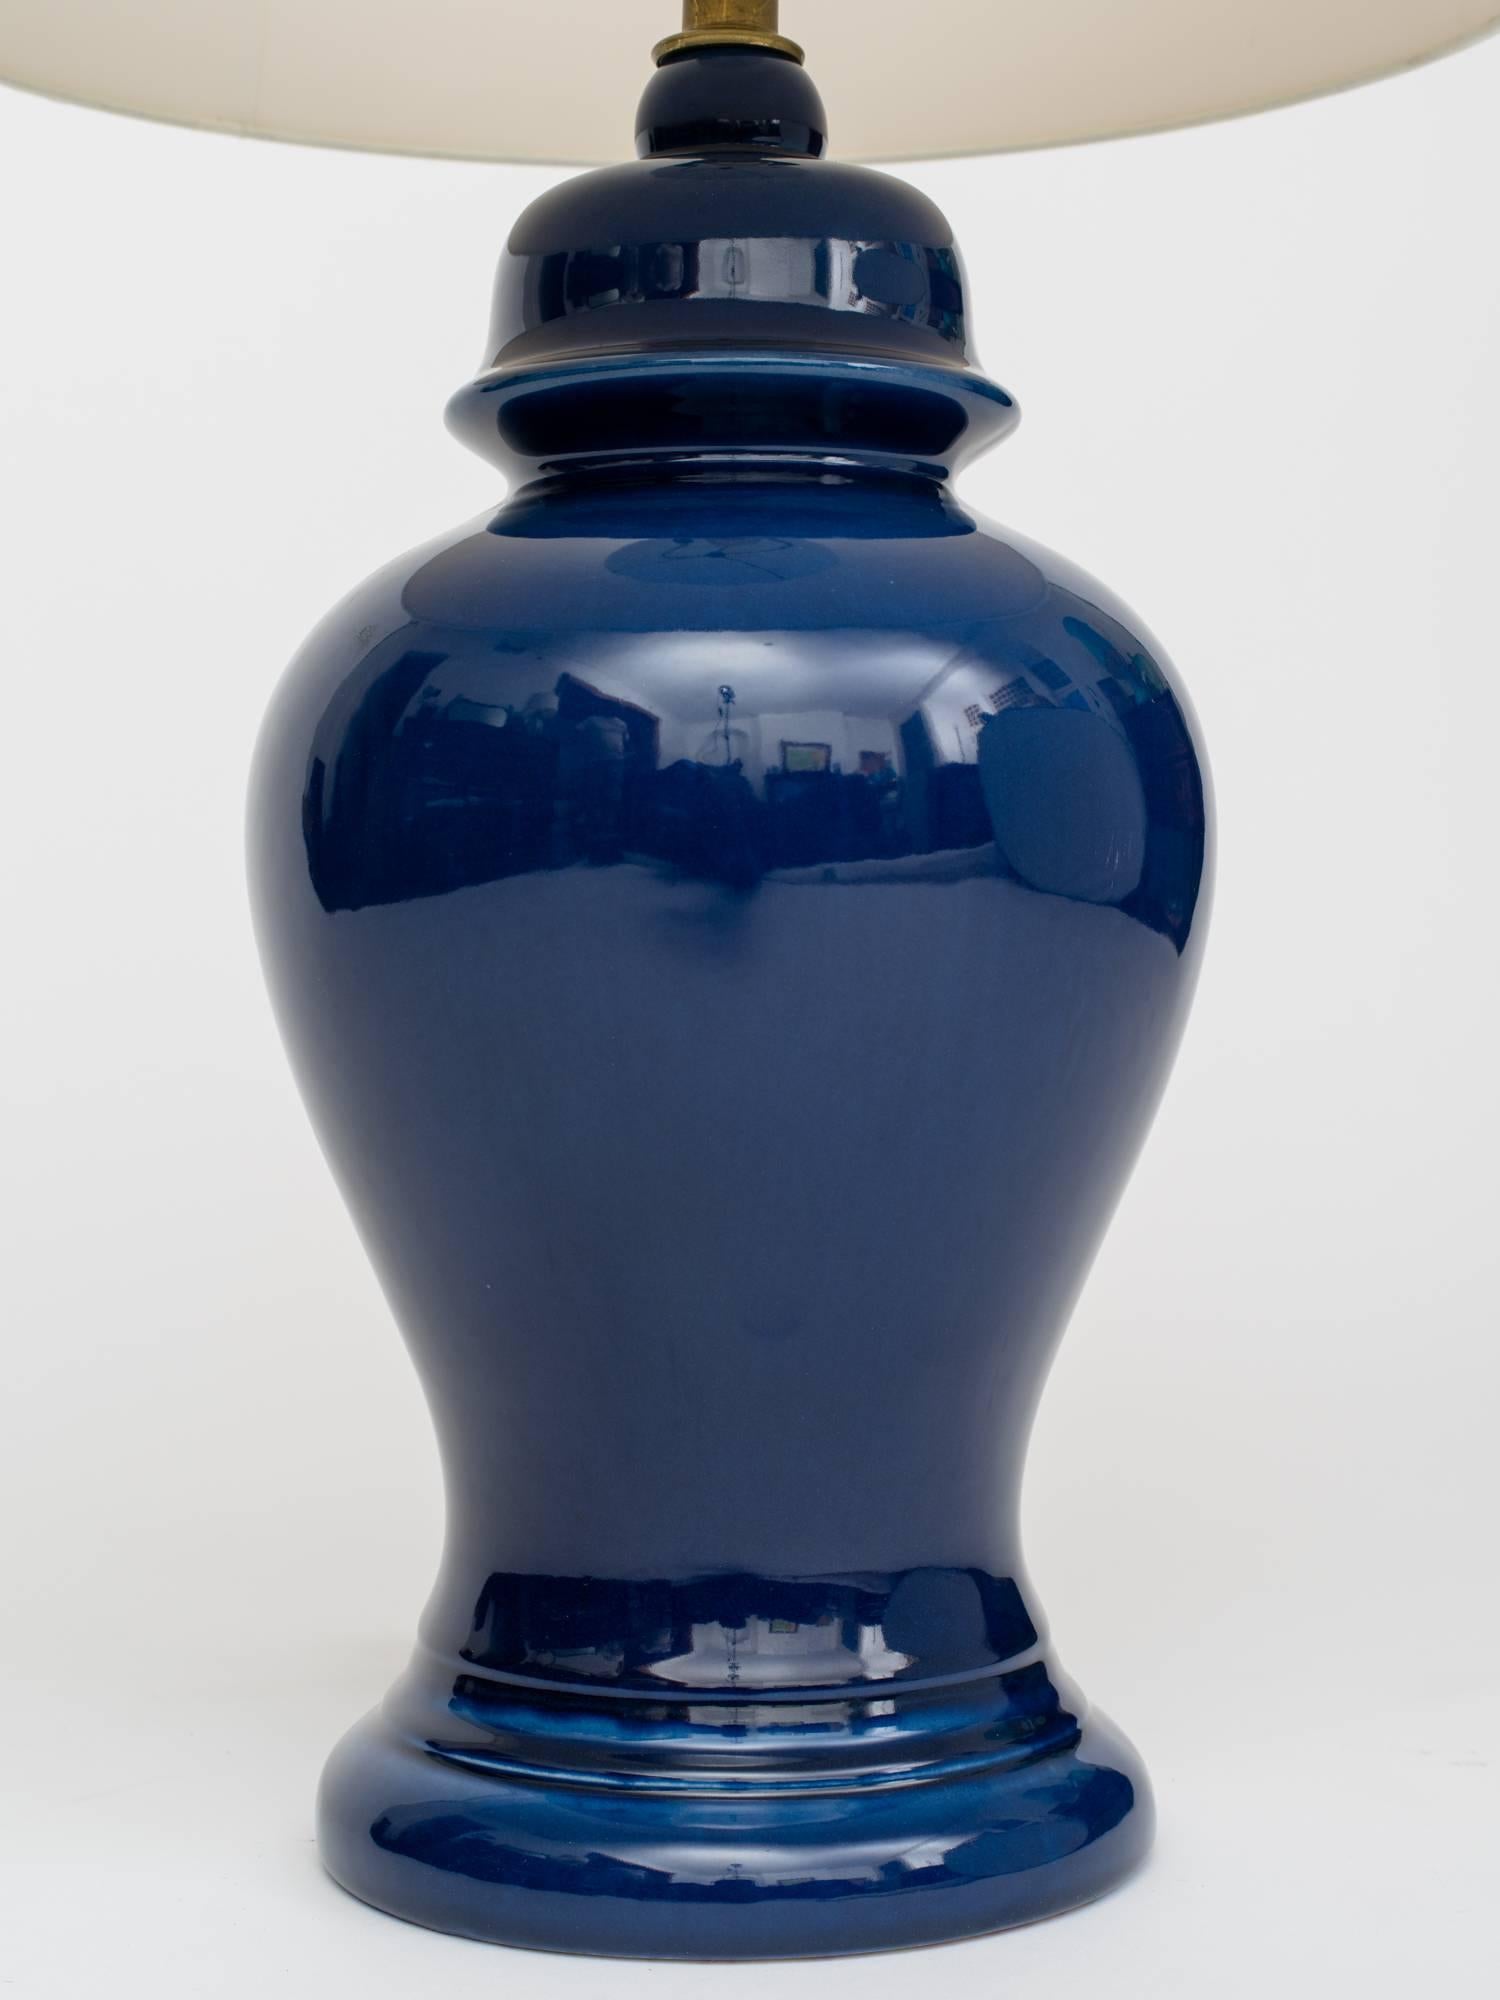 Gorgeous pair of 1960s indigo ceramic ginger jar form lamps. 
Lamp body measures 20